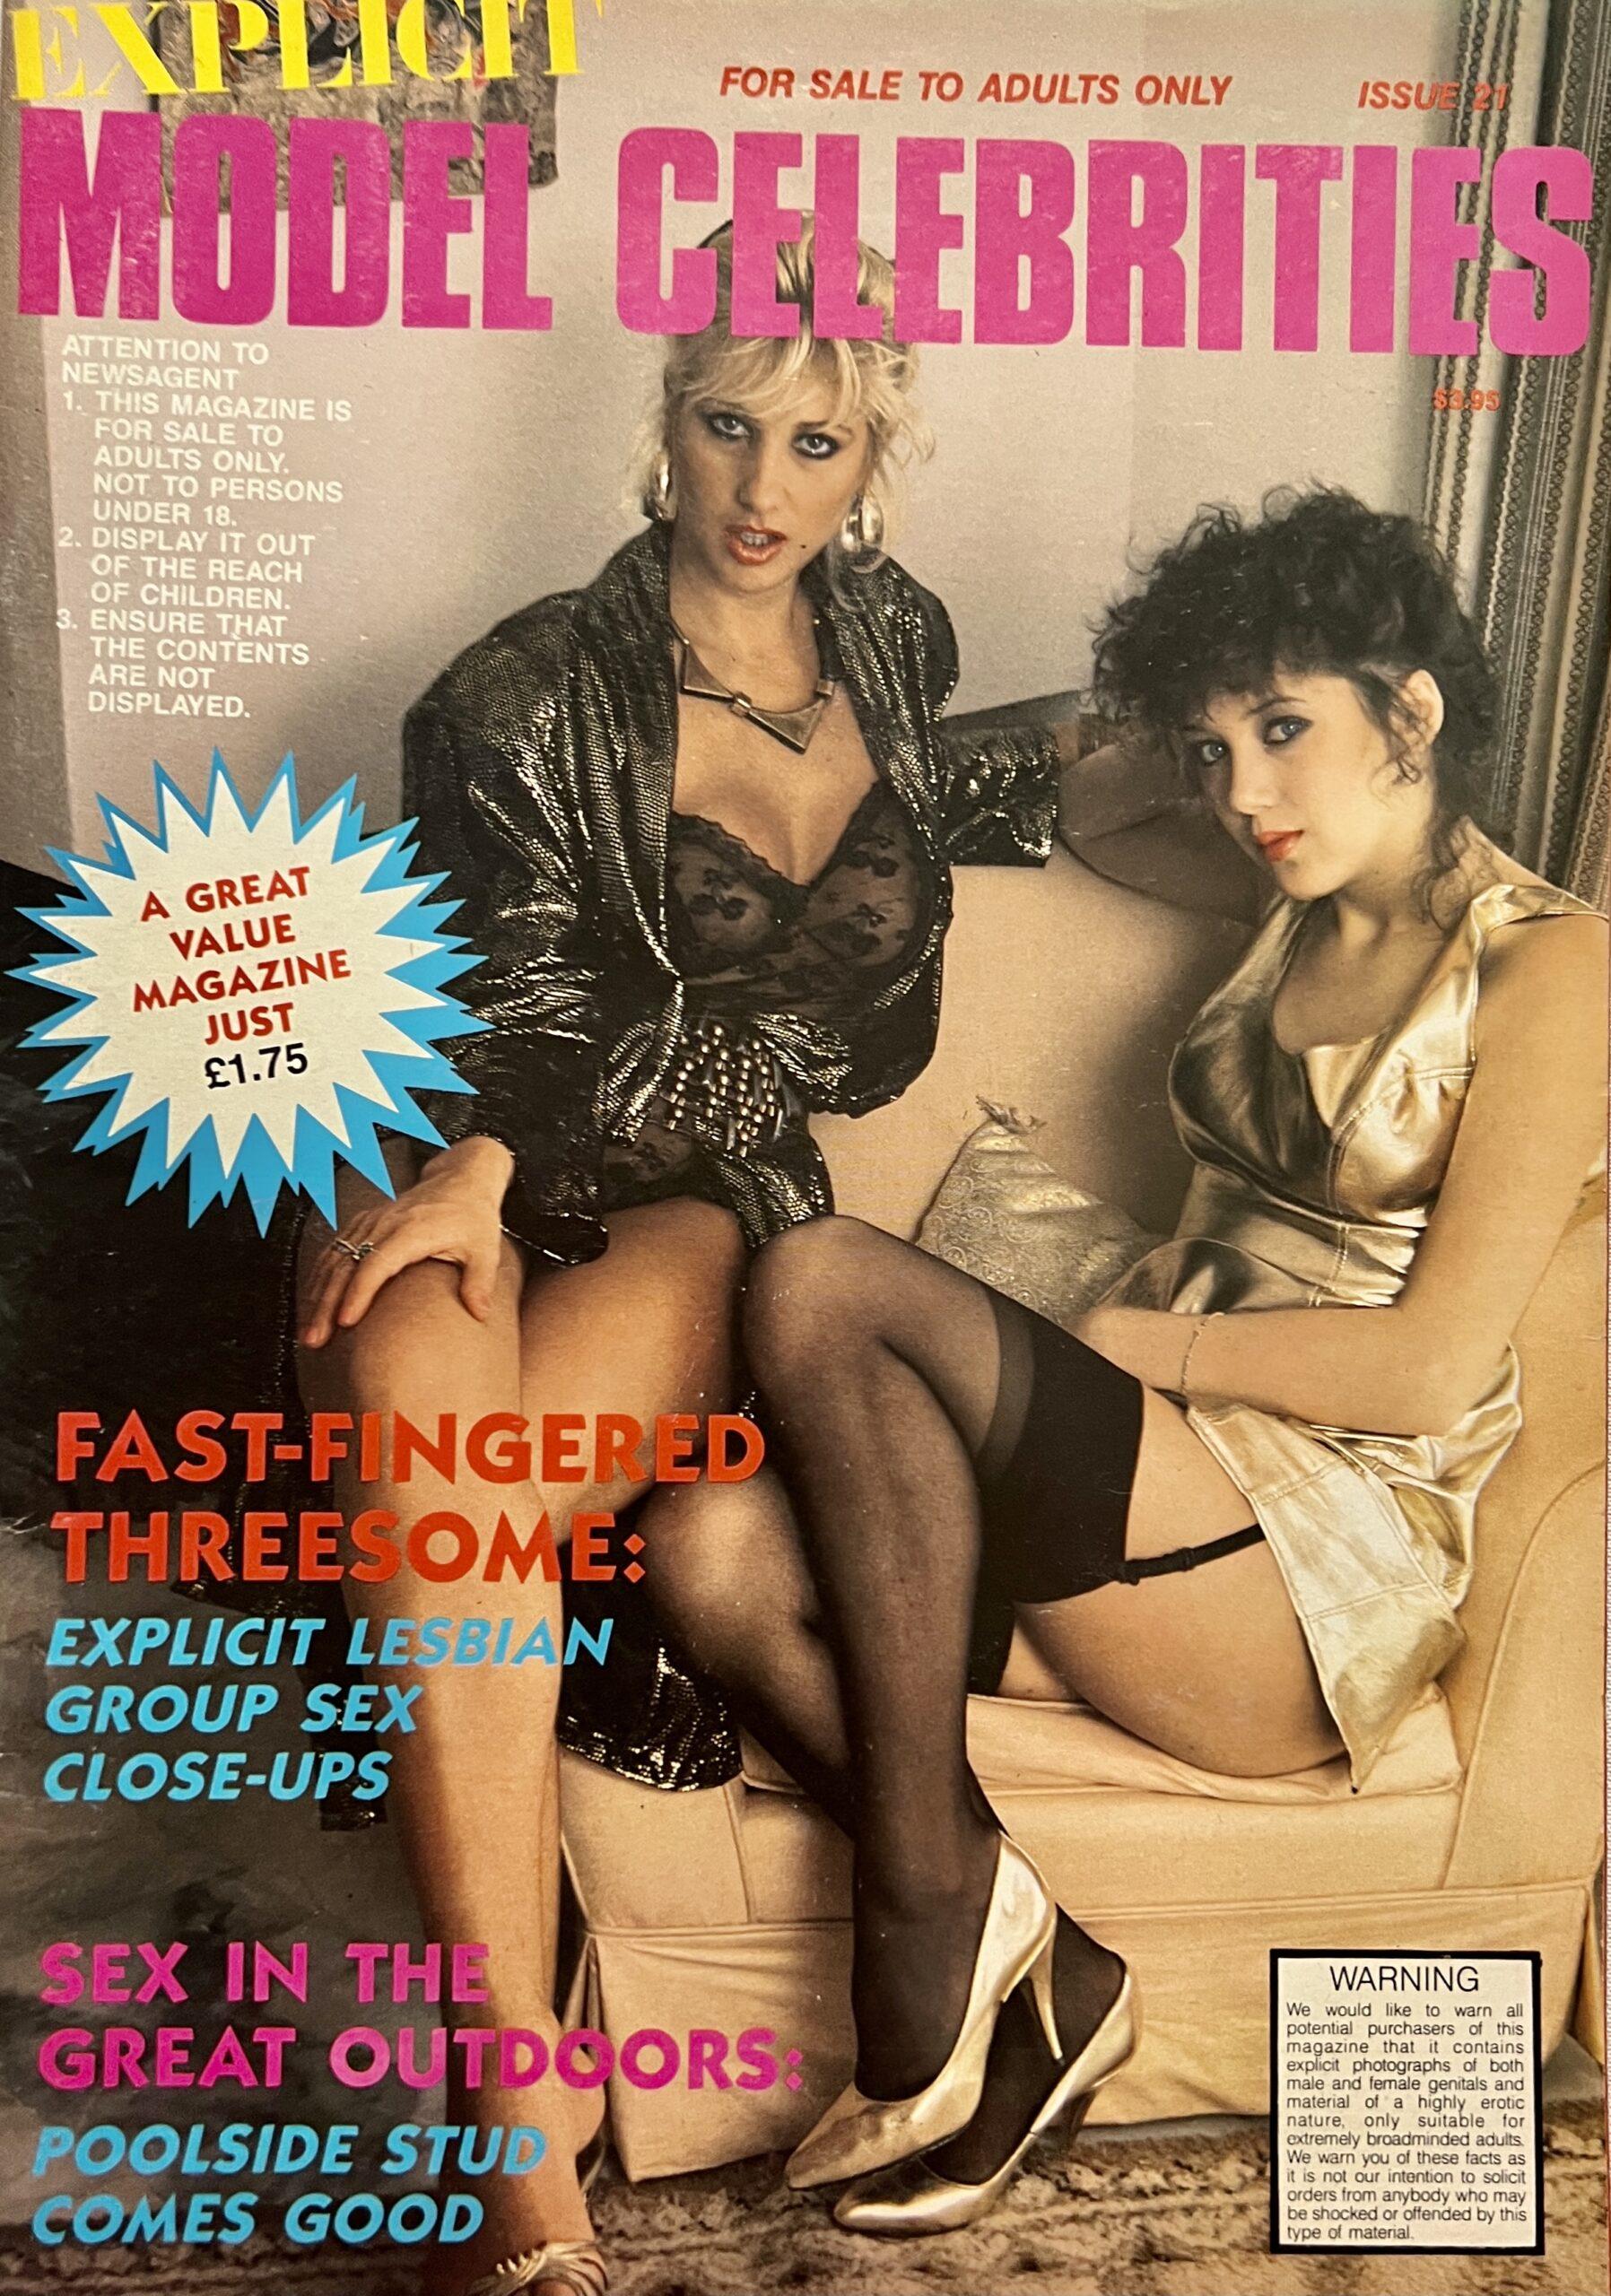 Explicit Model Celebrities #21 80S UK Magazine